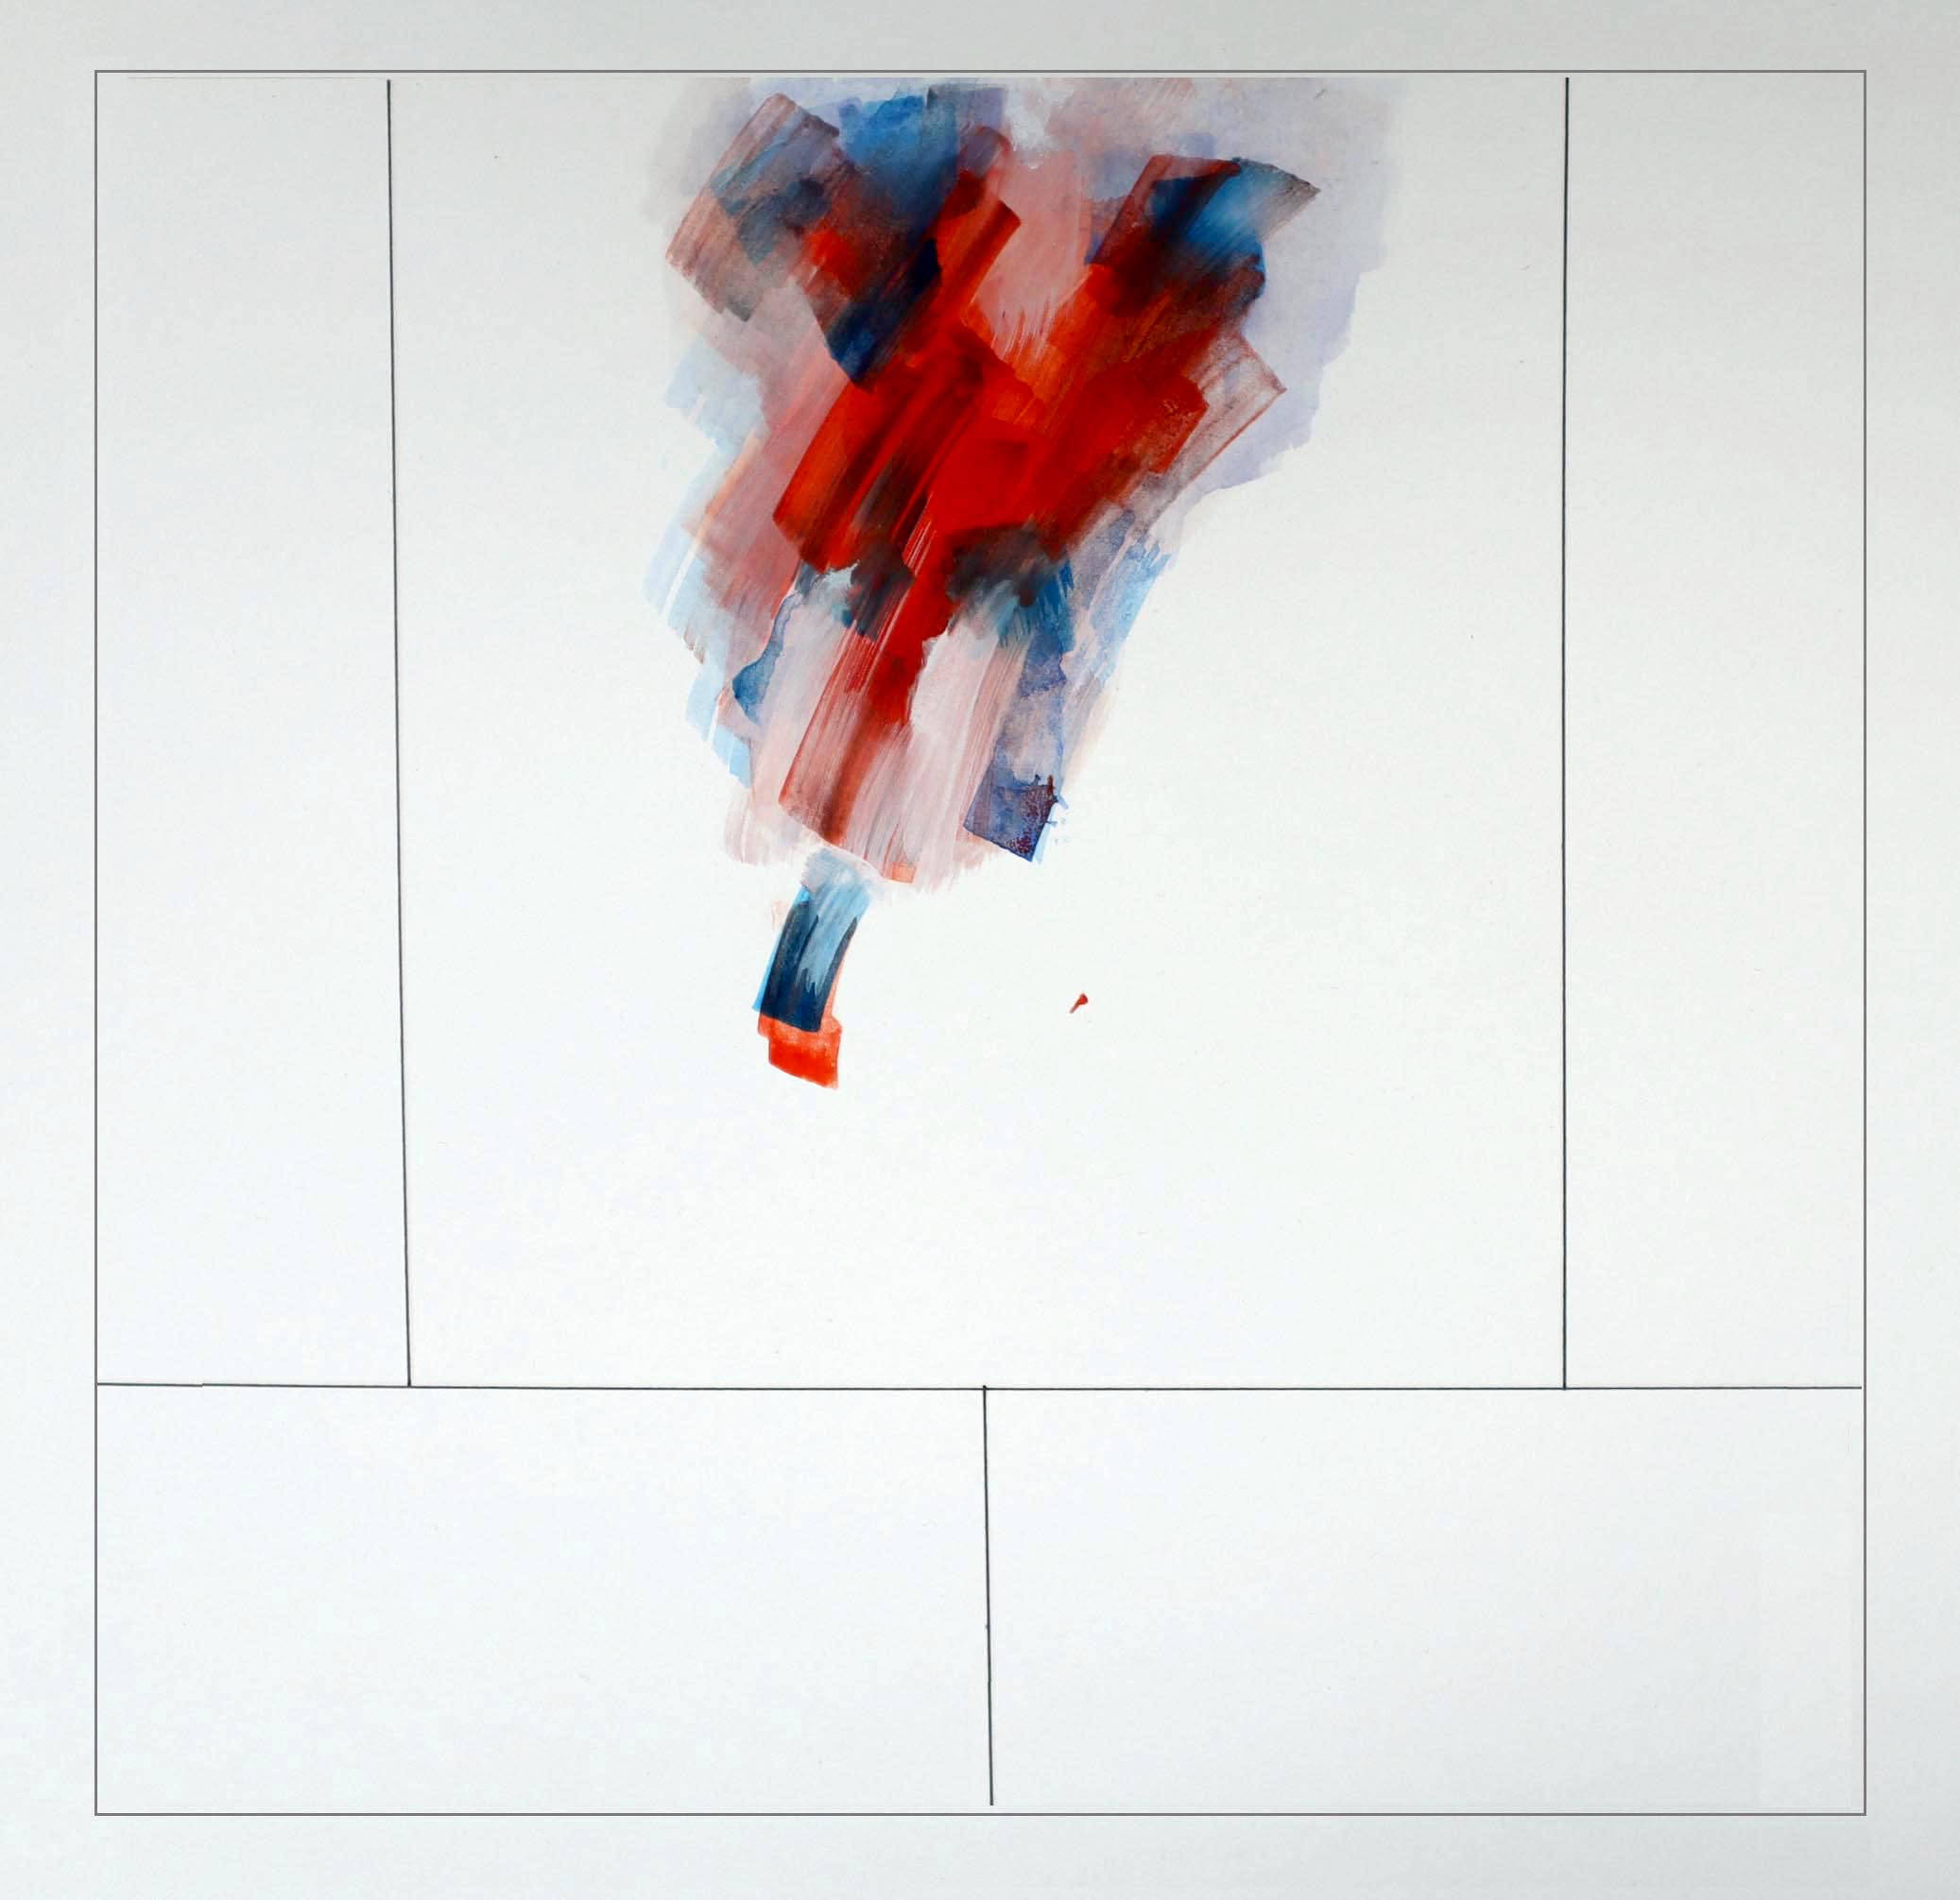 New work by Denis Buckley - Now Sleeps The Crimson Petal